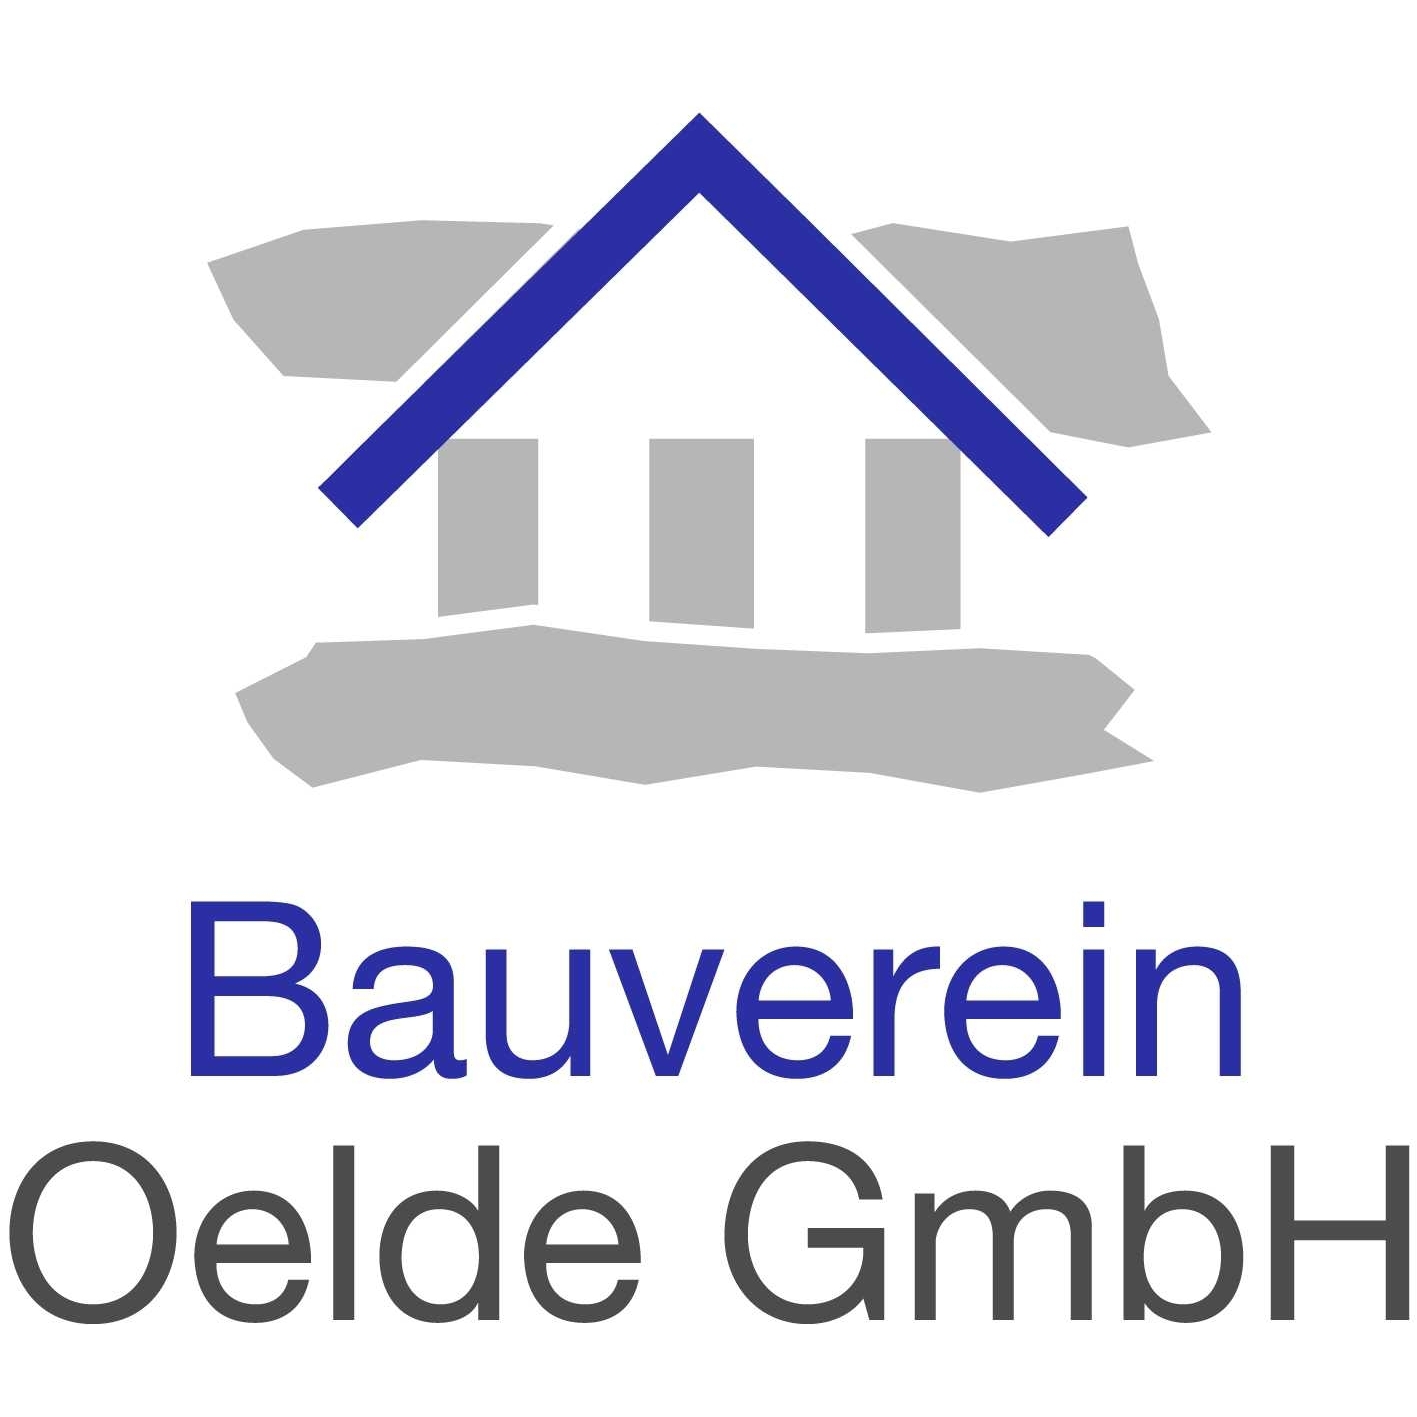 Bauverein Oelde GmbH in Oelde - Logo